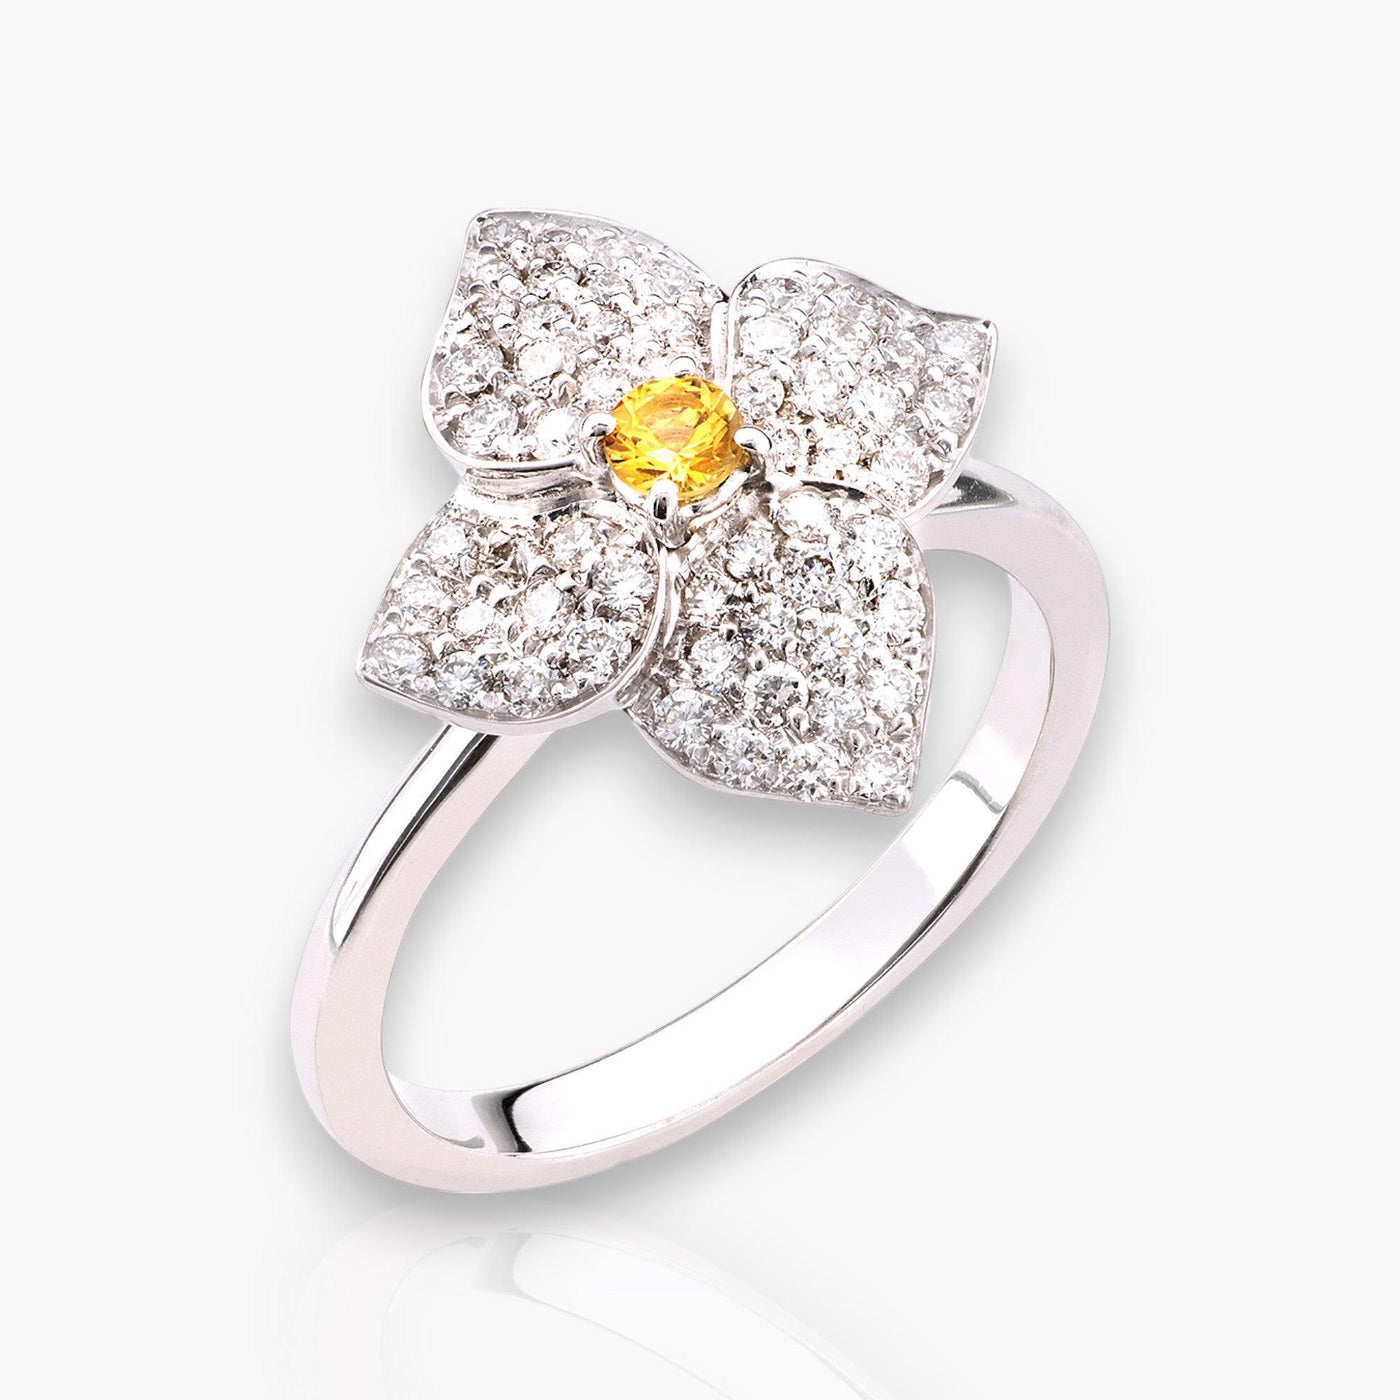 Ortensia Ring, White Gold, Diamonds And Yellow Sapphire - Moregola Fine Jewelry